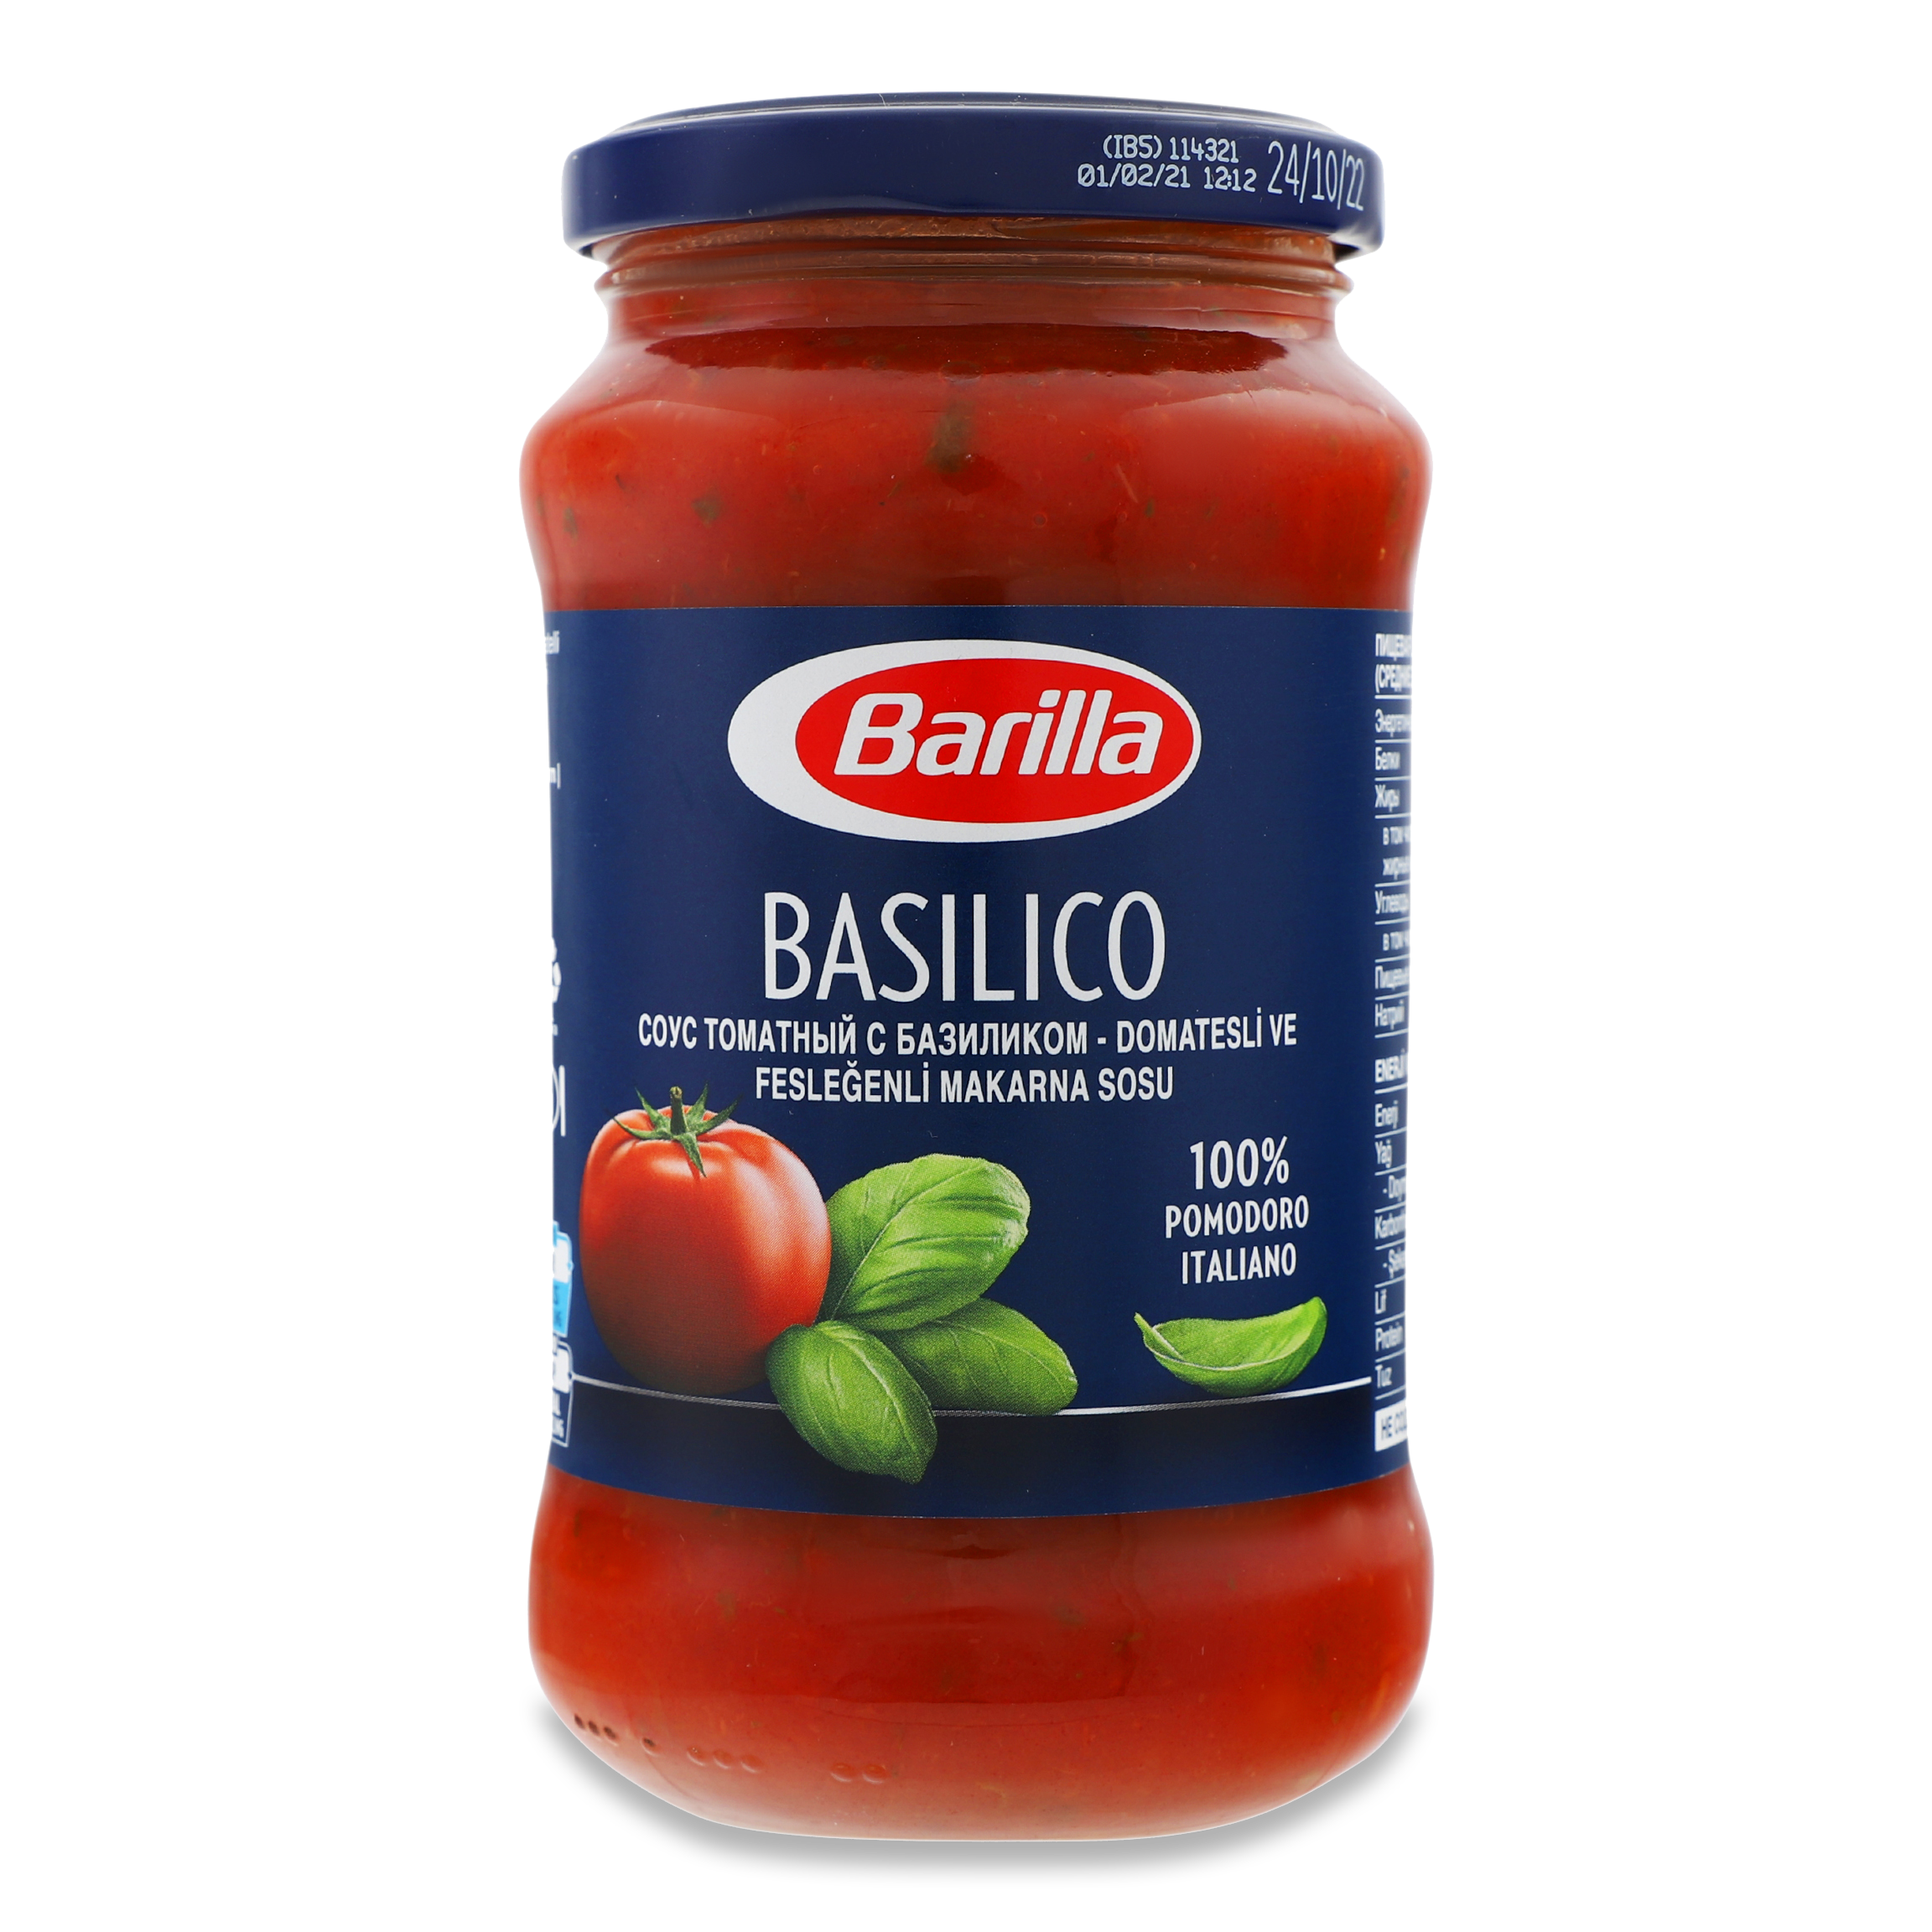 Barіlla Basilico sauce 400g